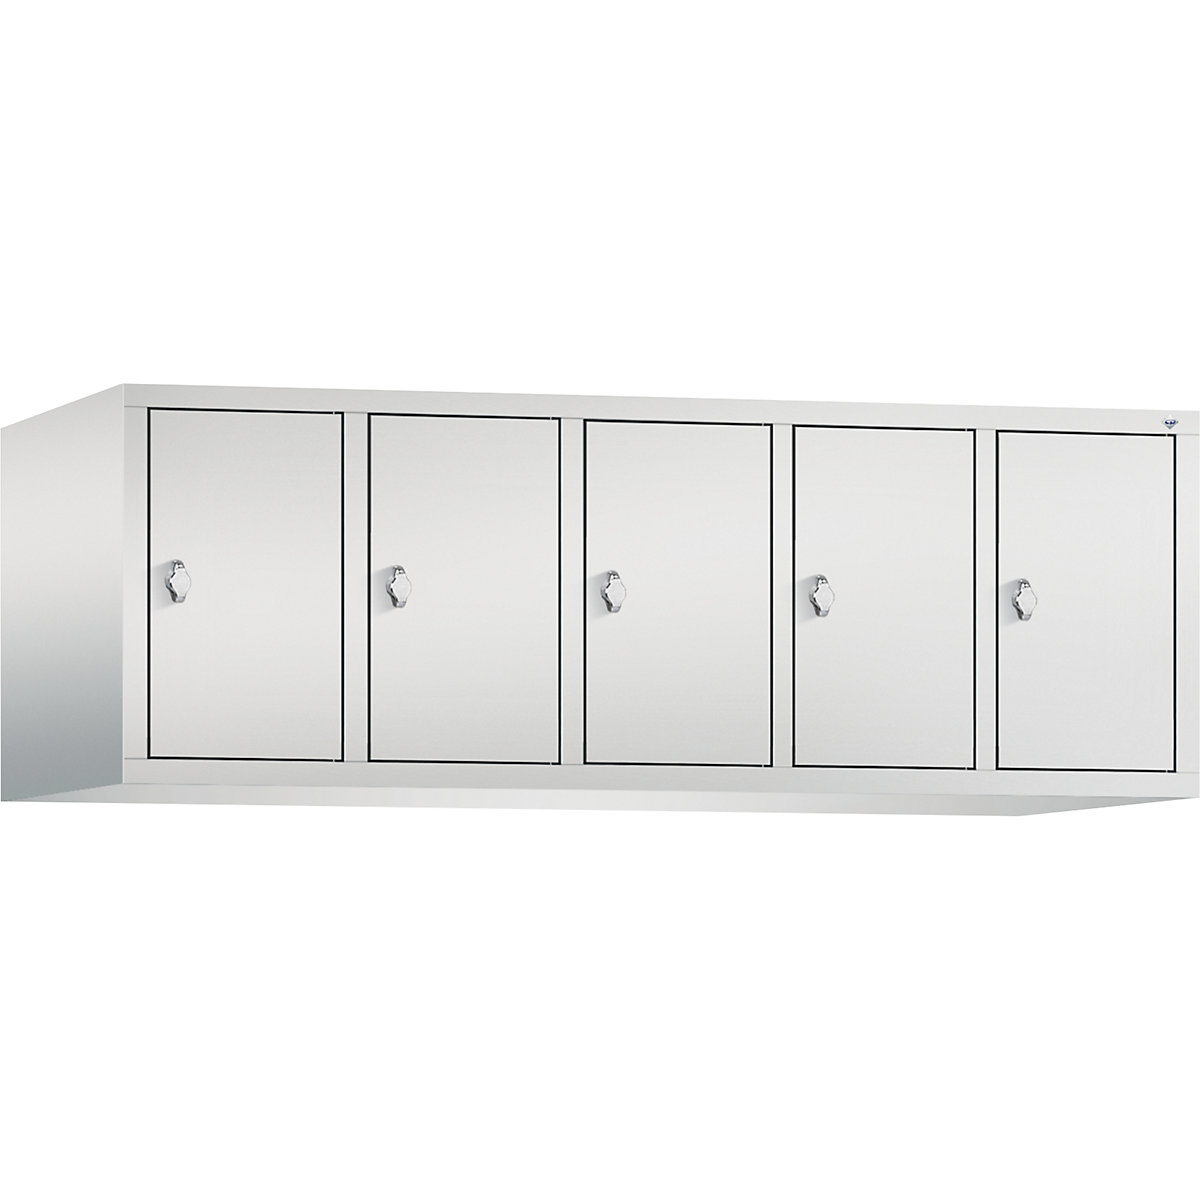 C+P – Altillo CLASSIC, 5 compartimentos, anchura de compartimento 300 mm, gris luminoso